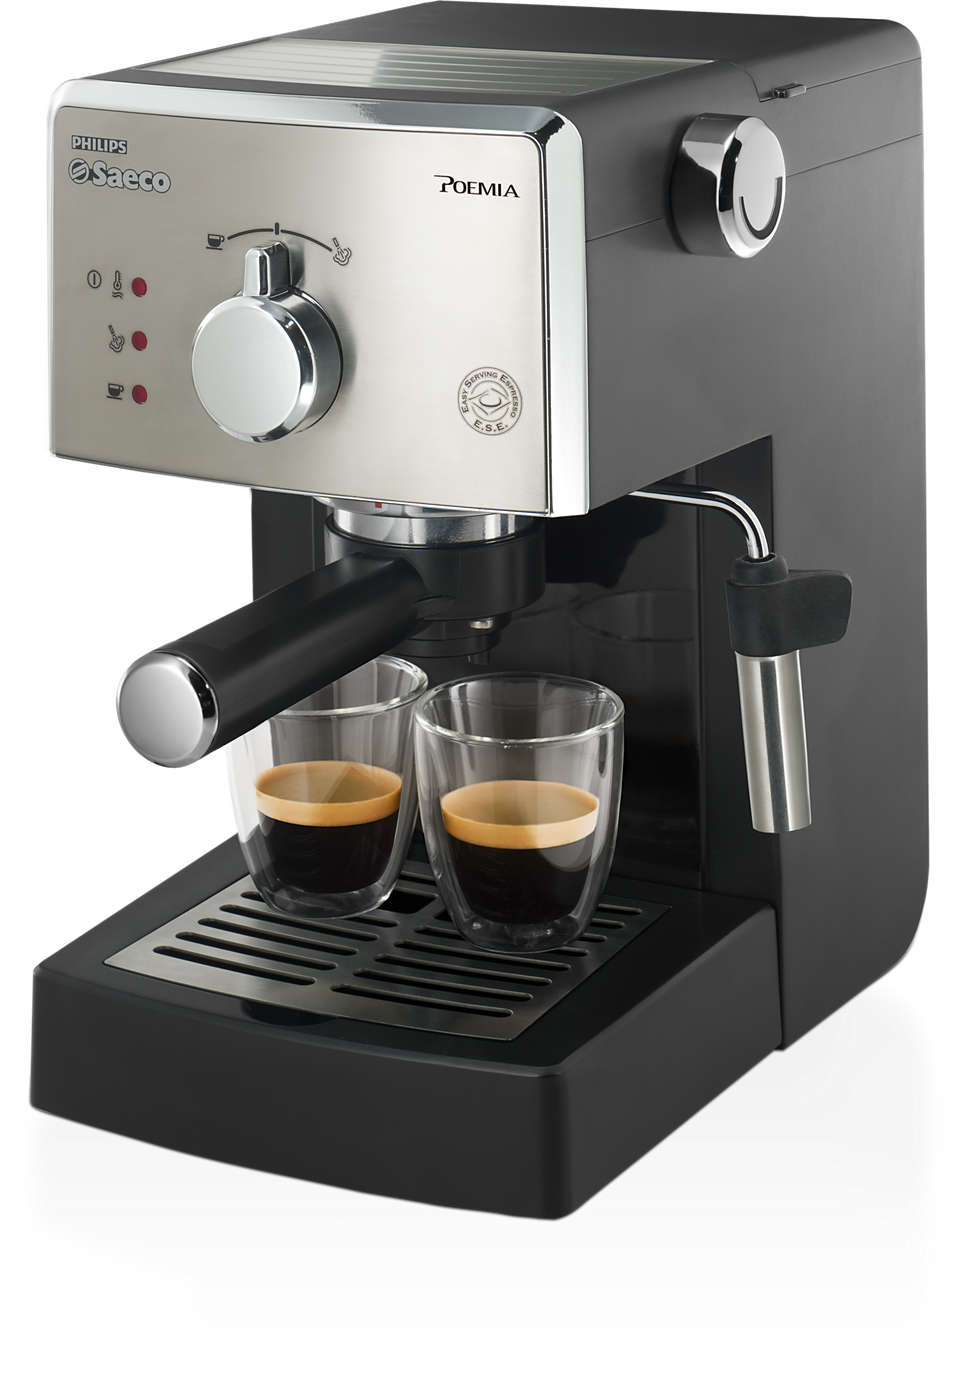 middelen Vernederen Verdorde Poemia Manual Espresso machine HD8325/47 | Saeco